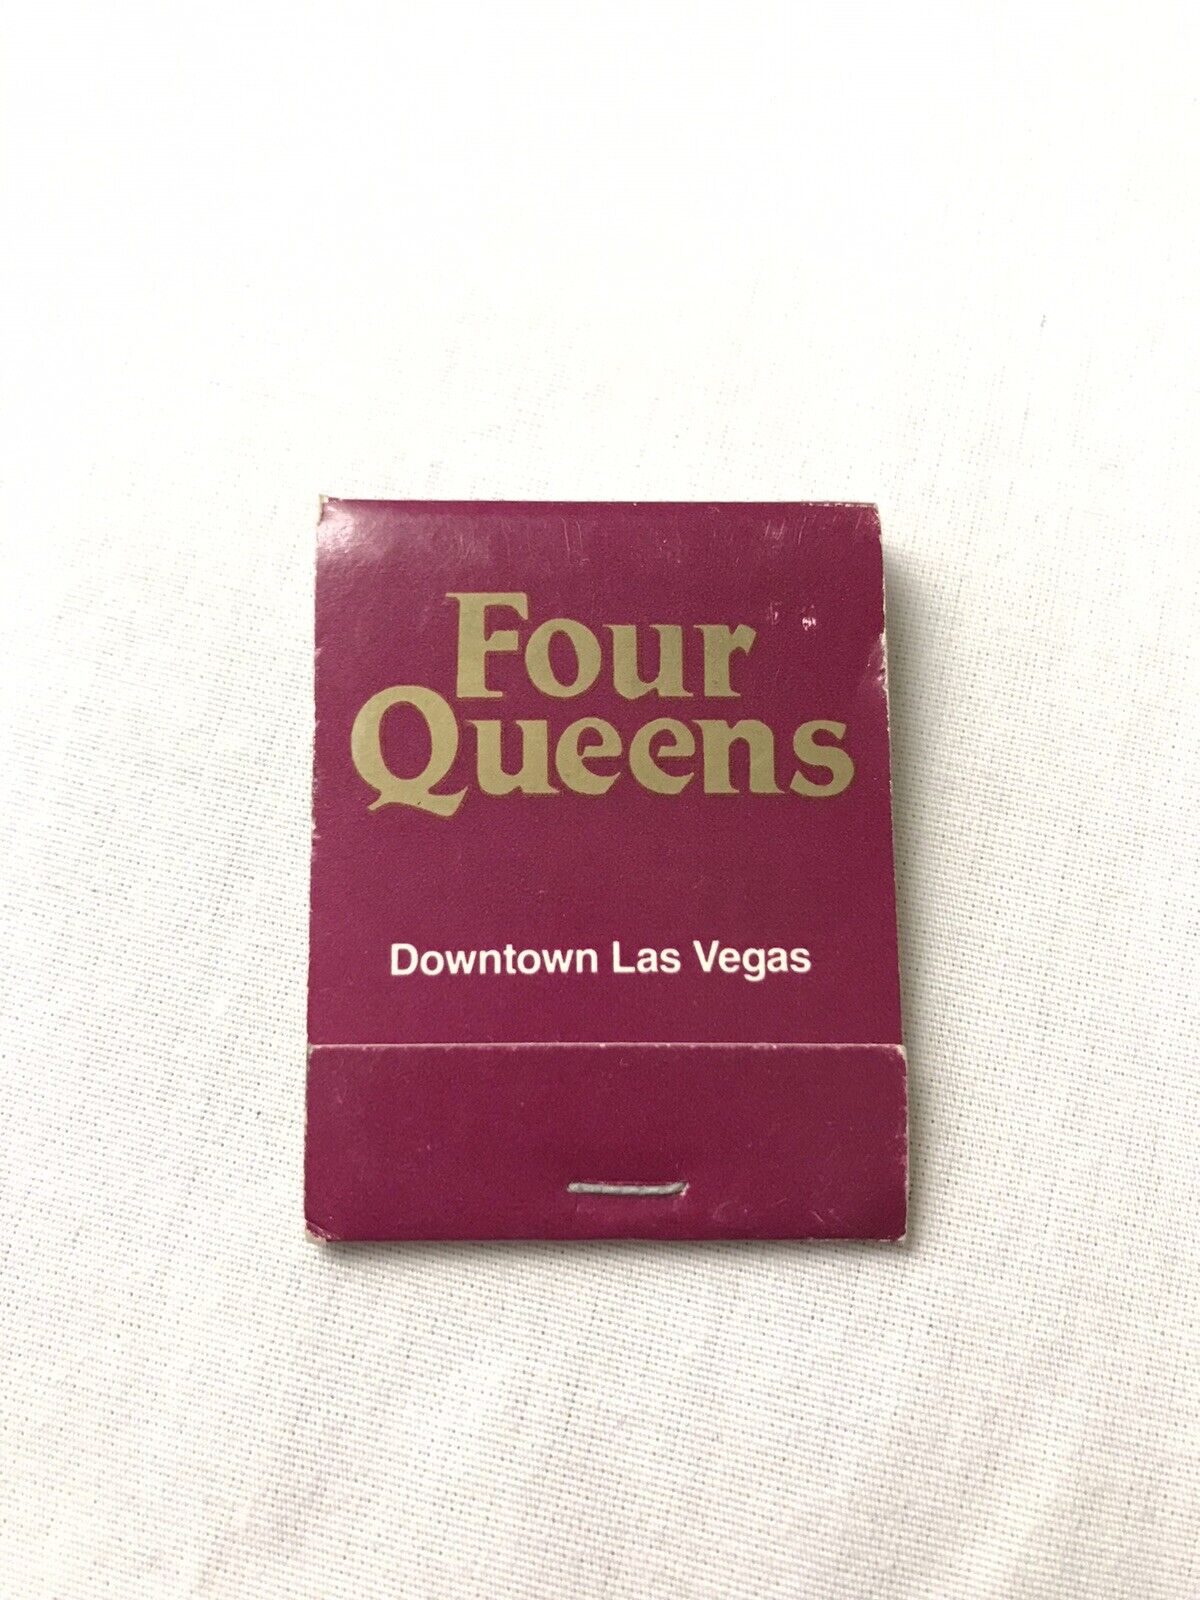 Four Queens Hotel & Casino Las Vegas Vintage Matchbook 